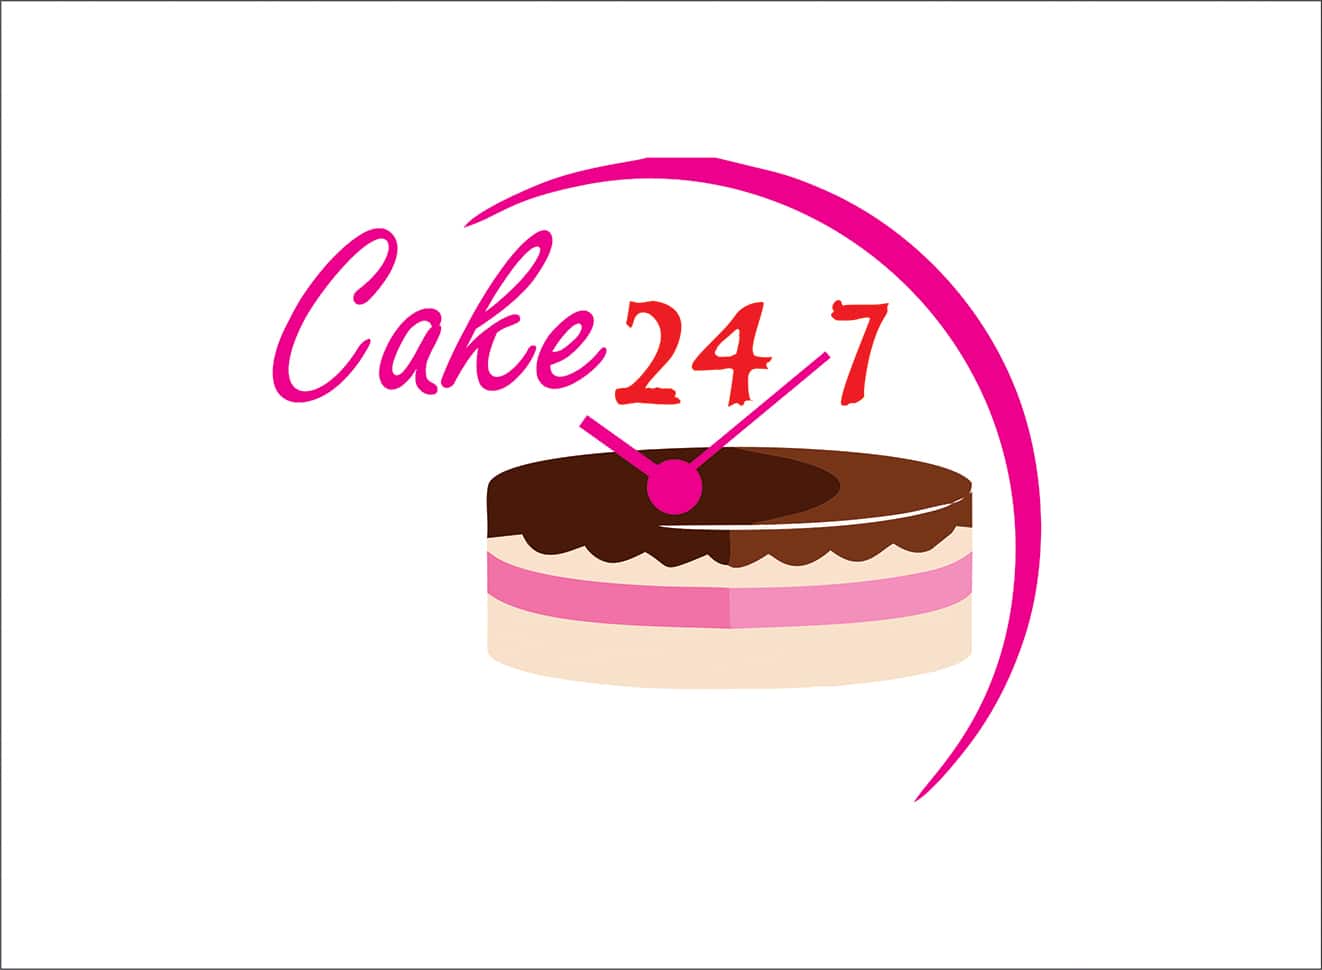 Cake 24/7